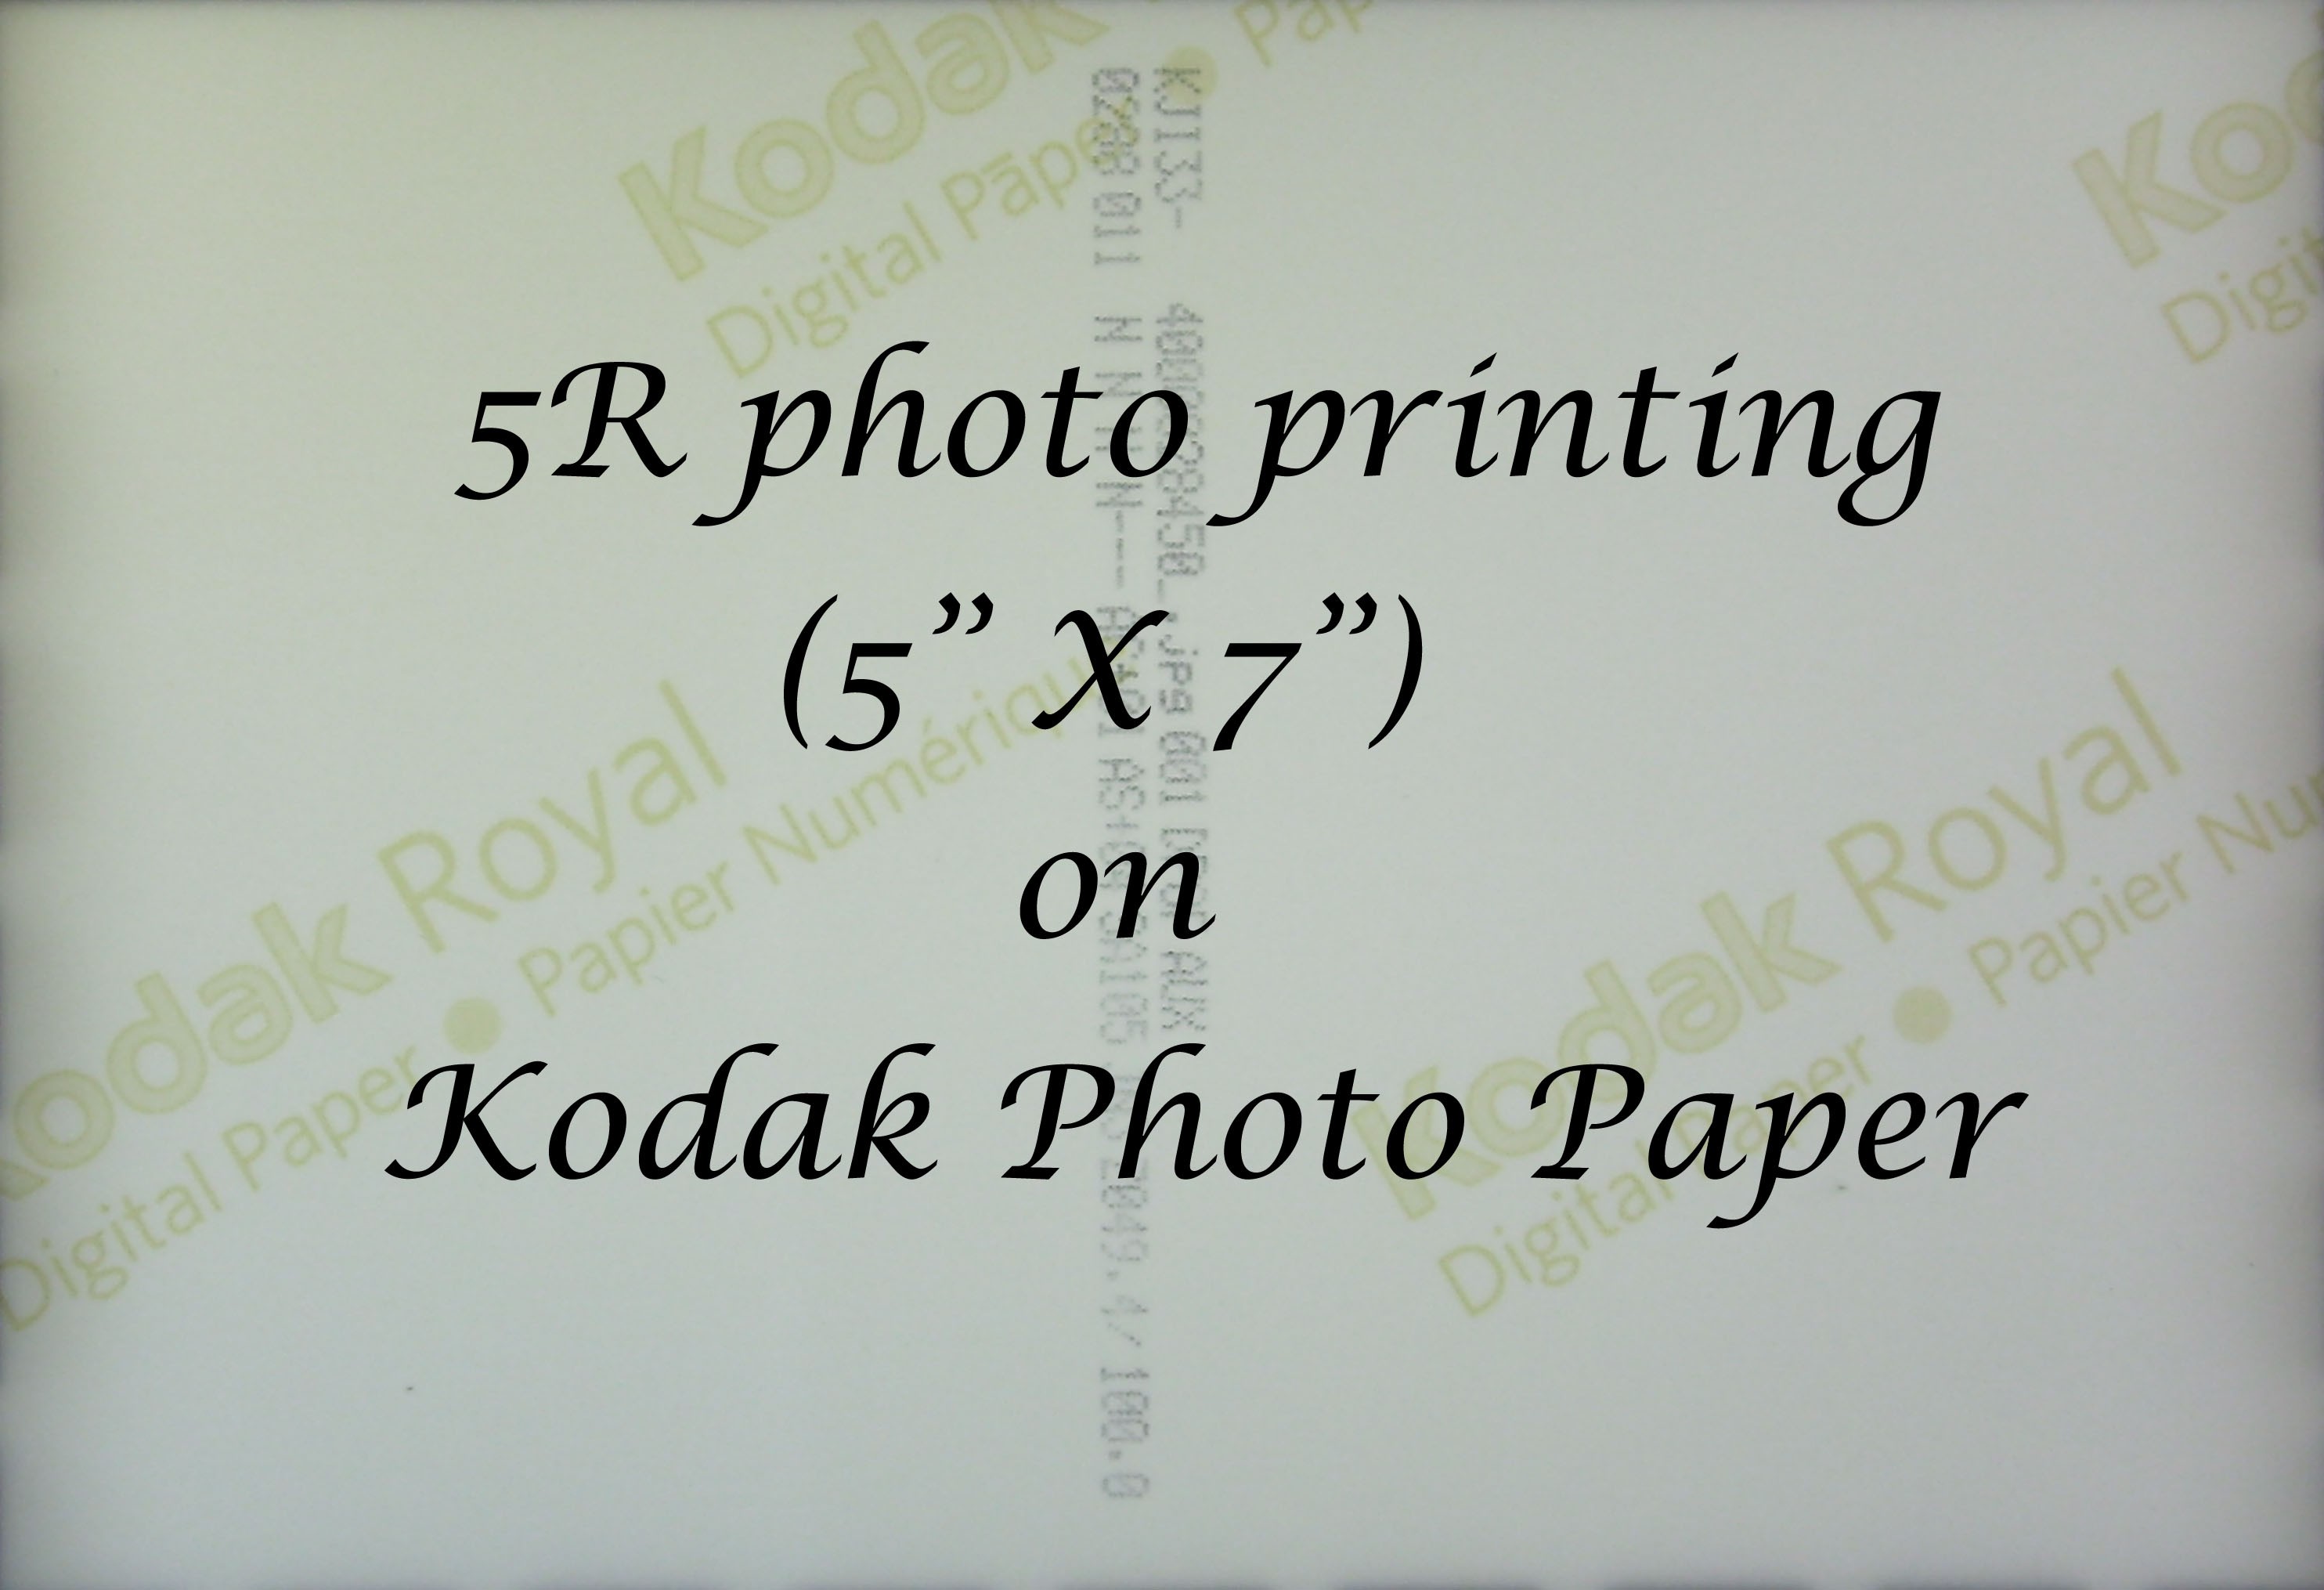 5R photo printing